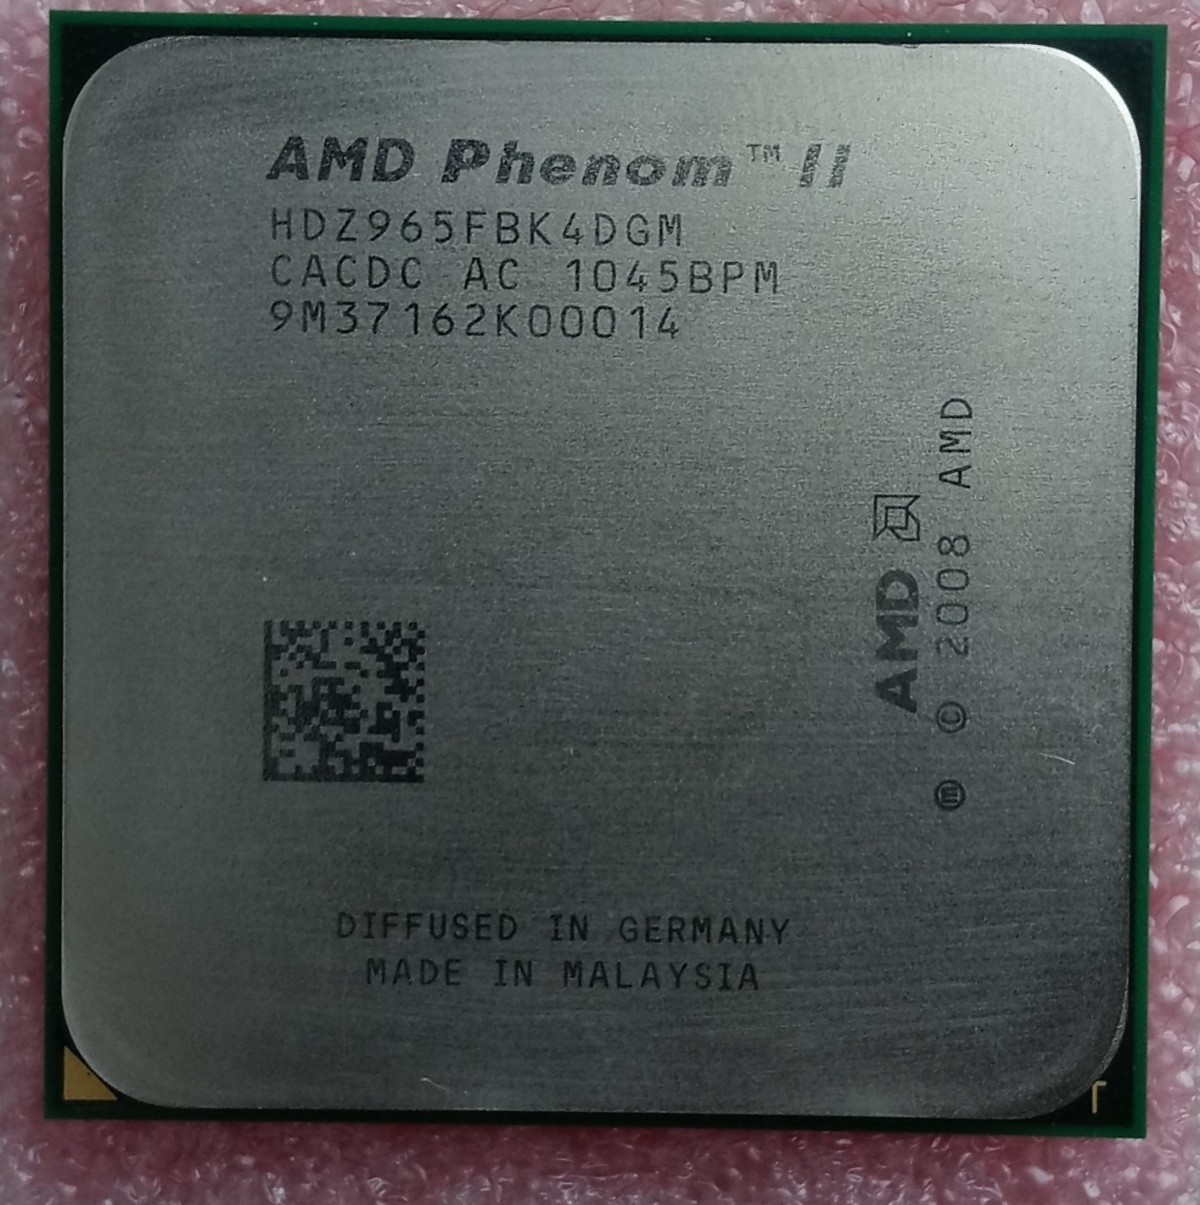 AMD Phenom II x4 965 Processor @ 3.4GHz - Tested